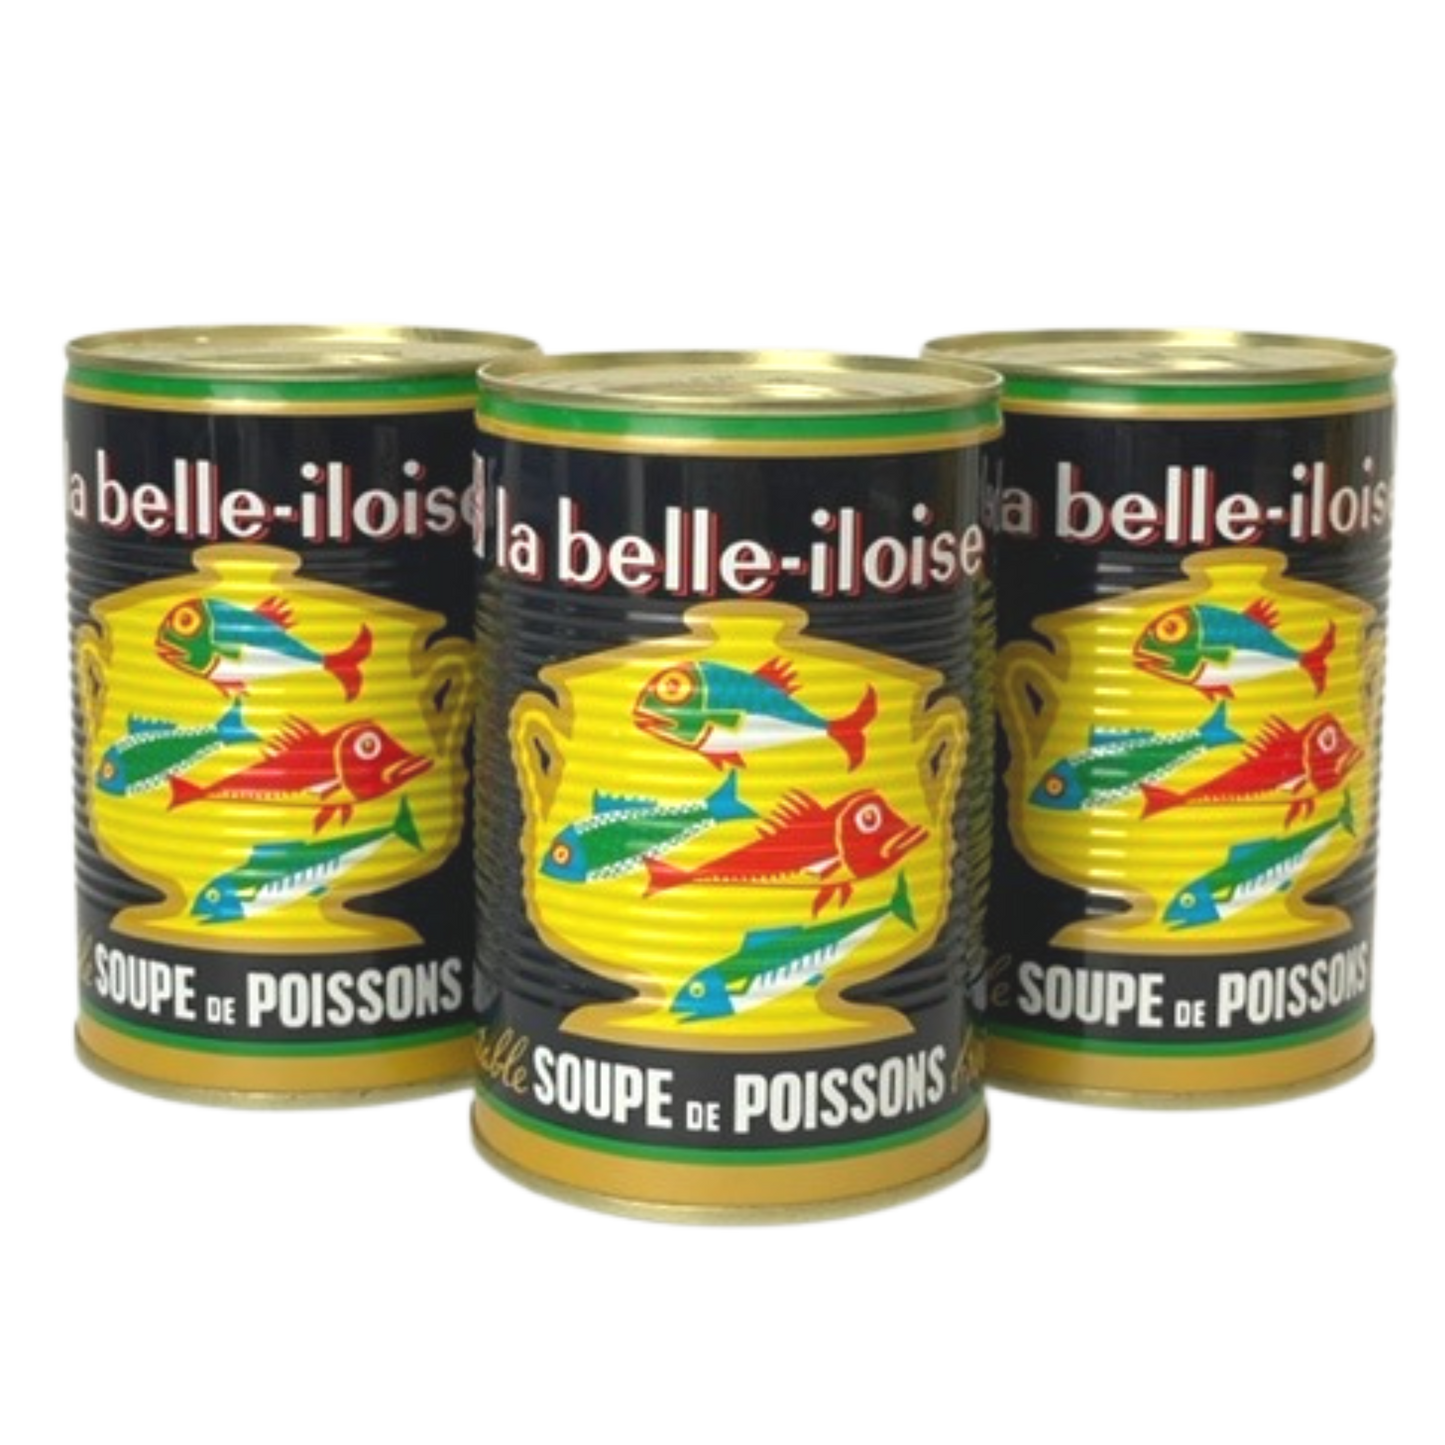 Soupe de poisons | Klassische bretonische Fischsuppe | La Belle-Iloise